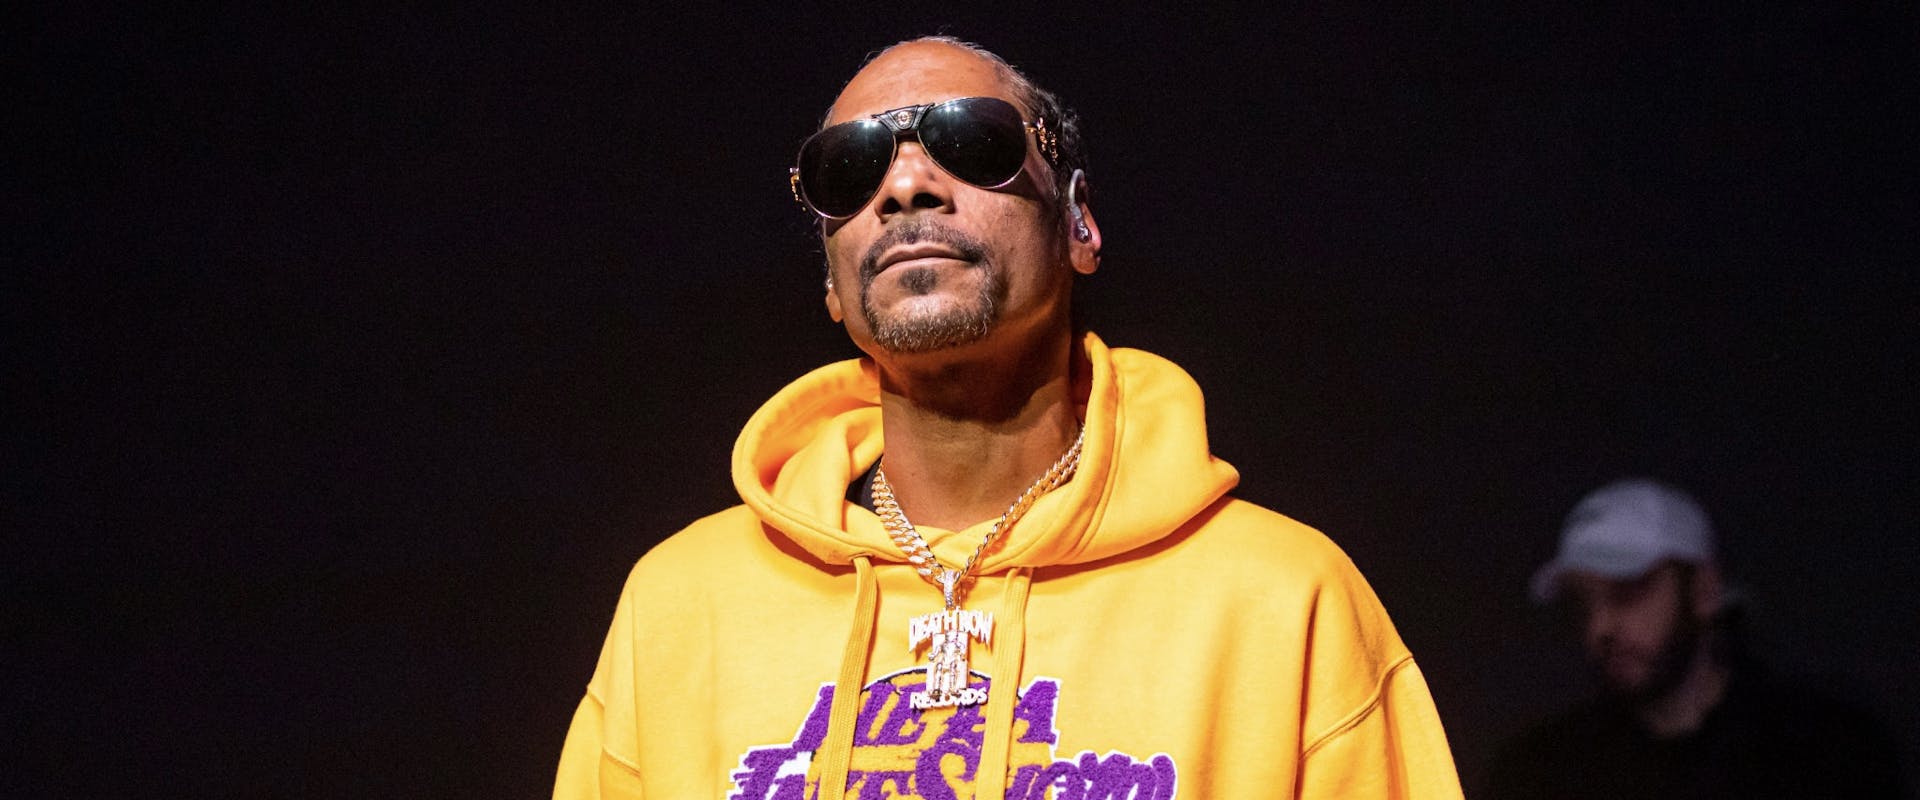 Snoop Dogg in Detroit 2020